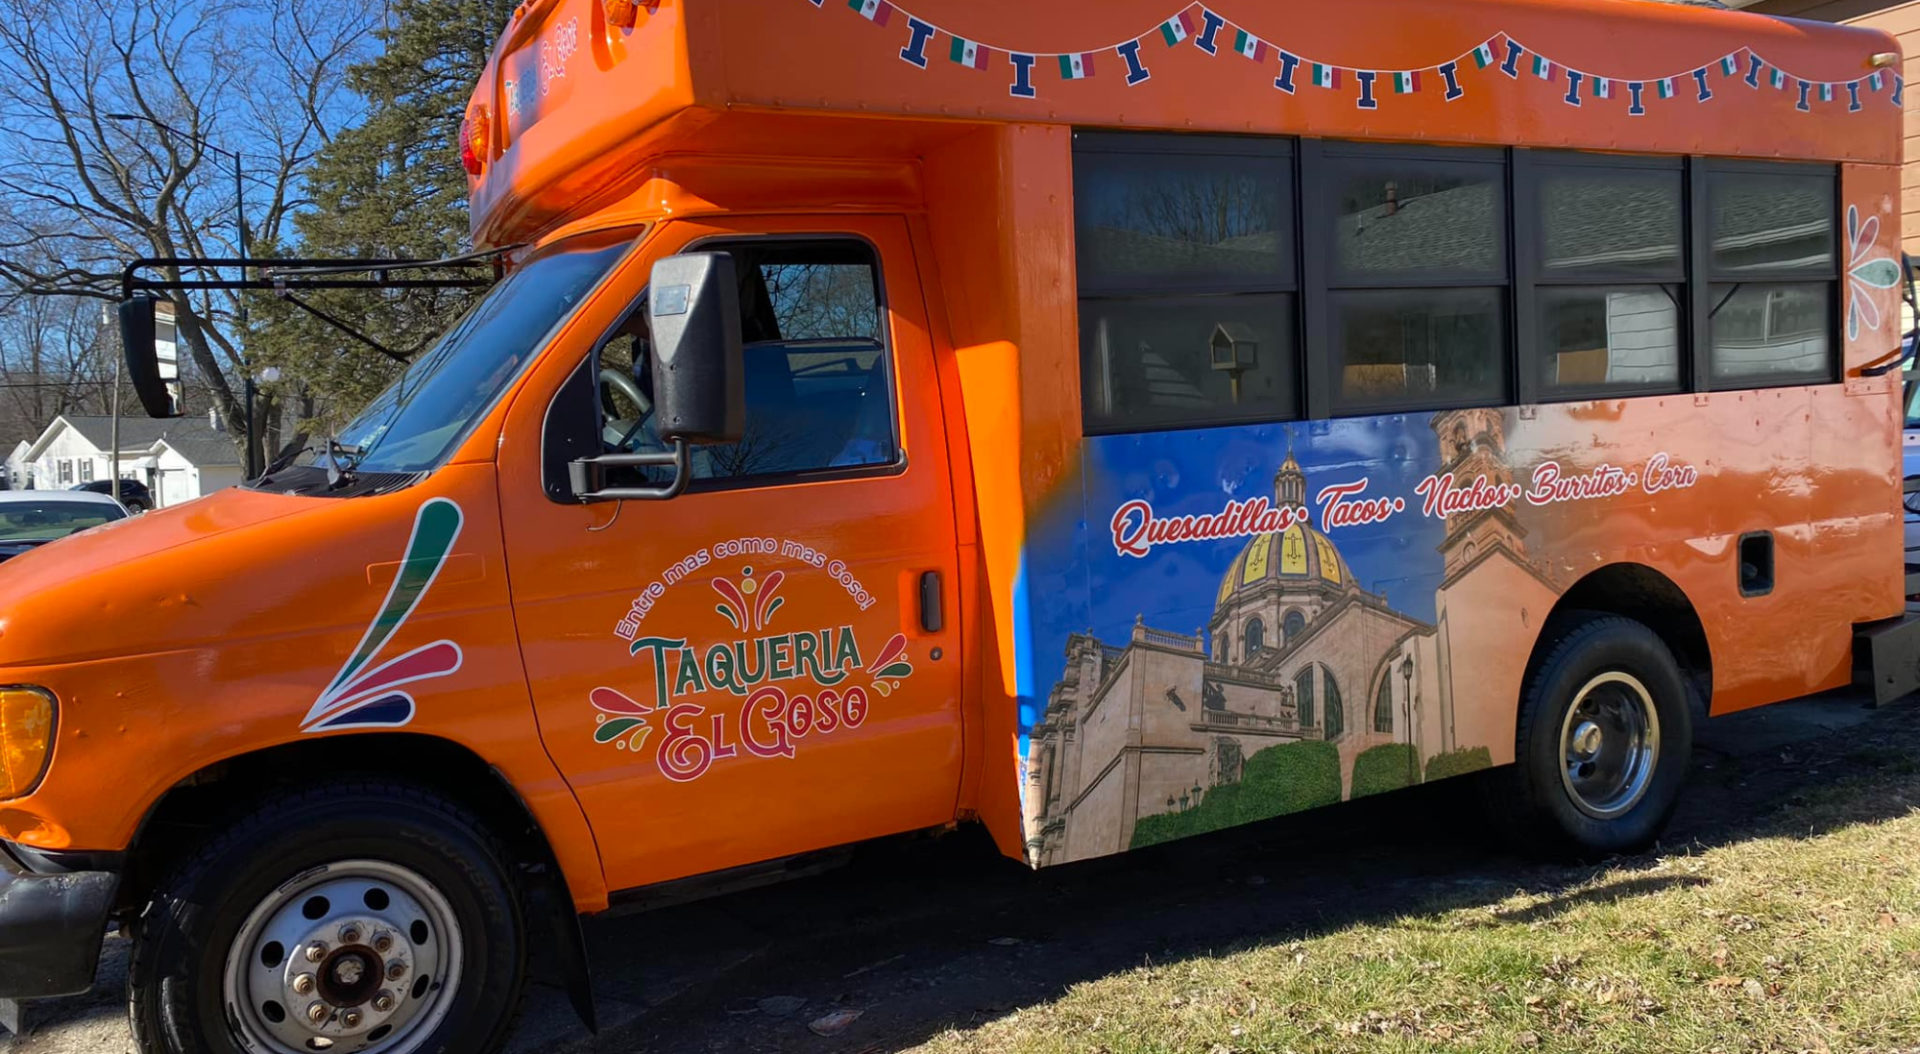 Taqueria El Goso food truck opening soon in Champaign-Urbana